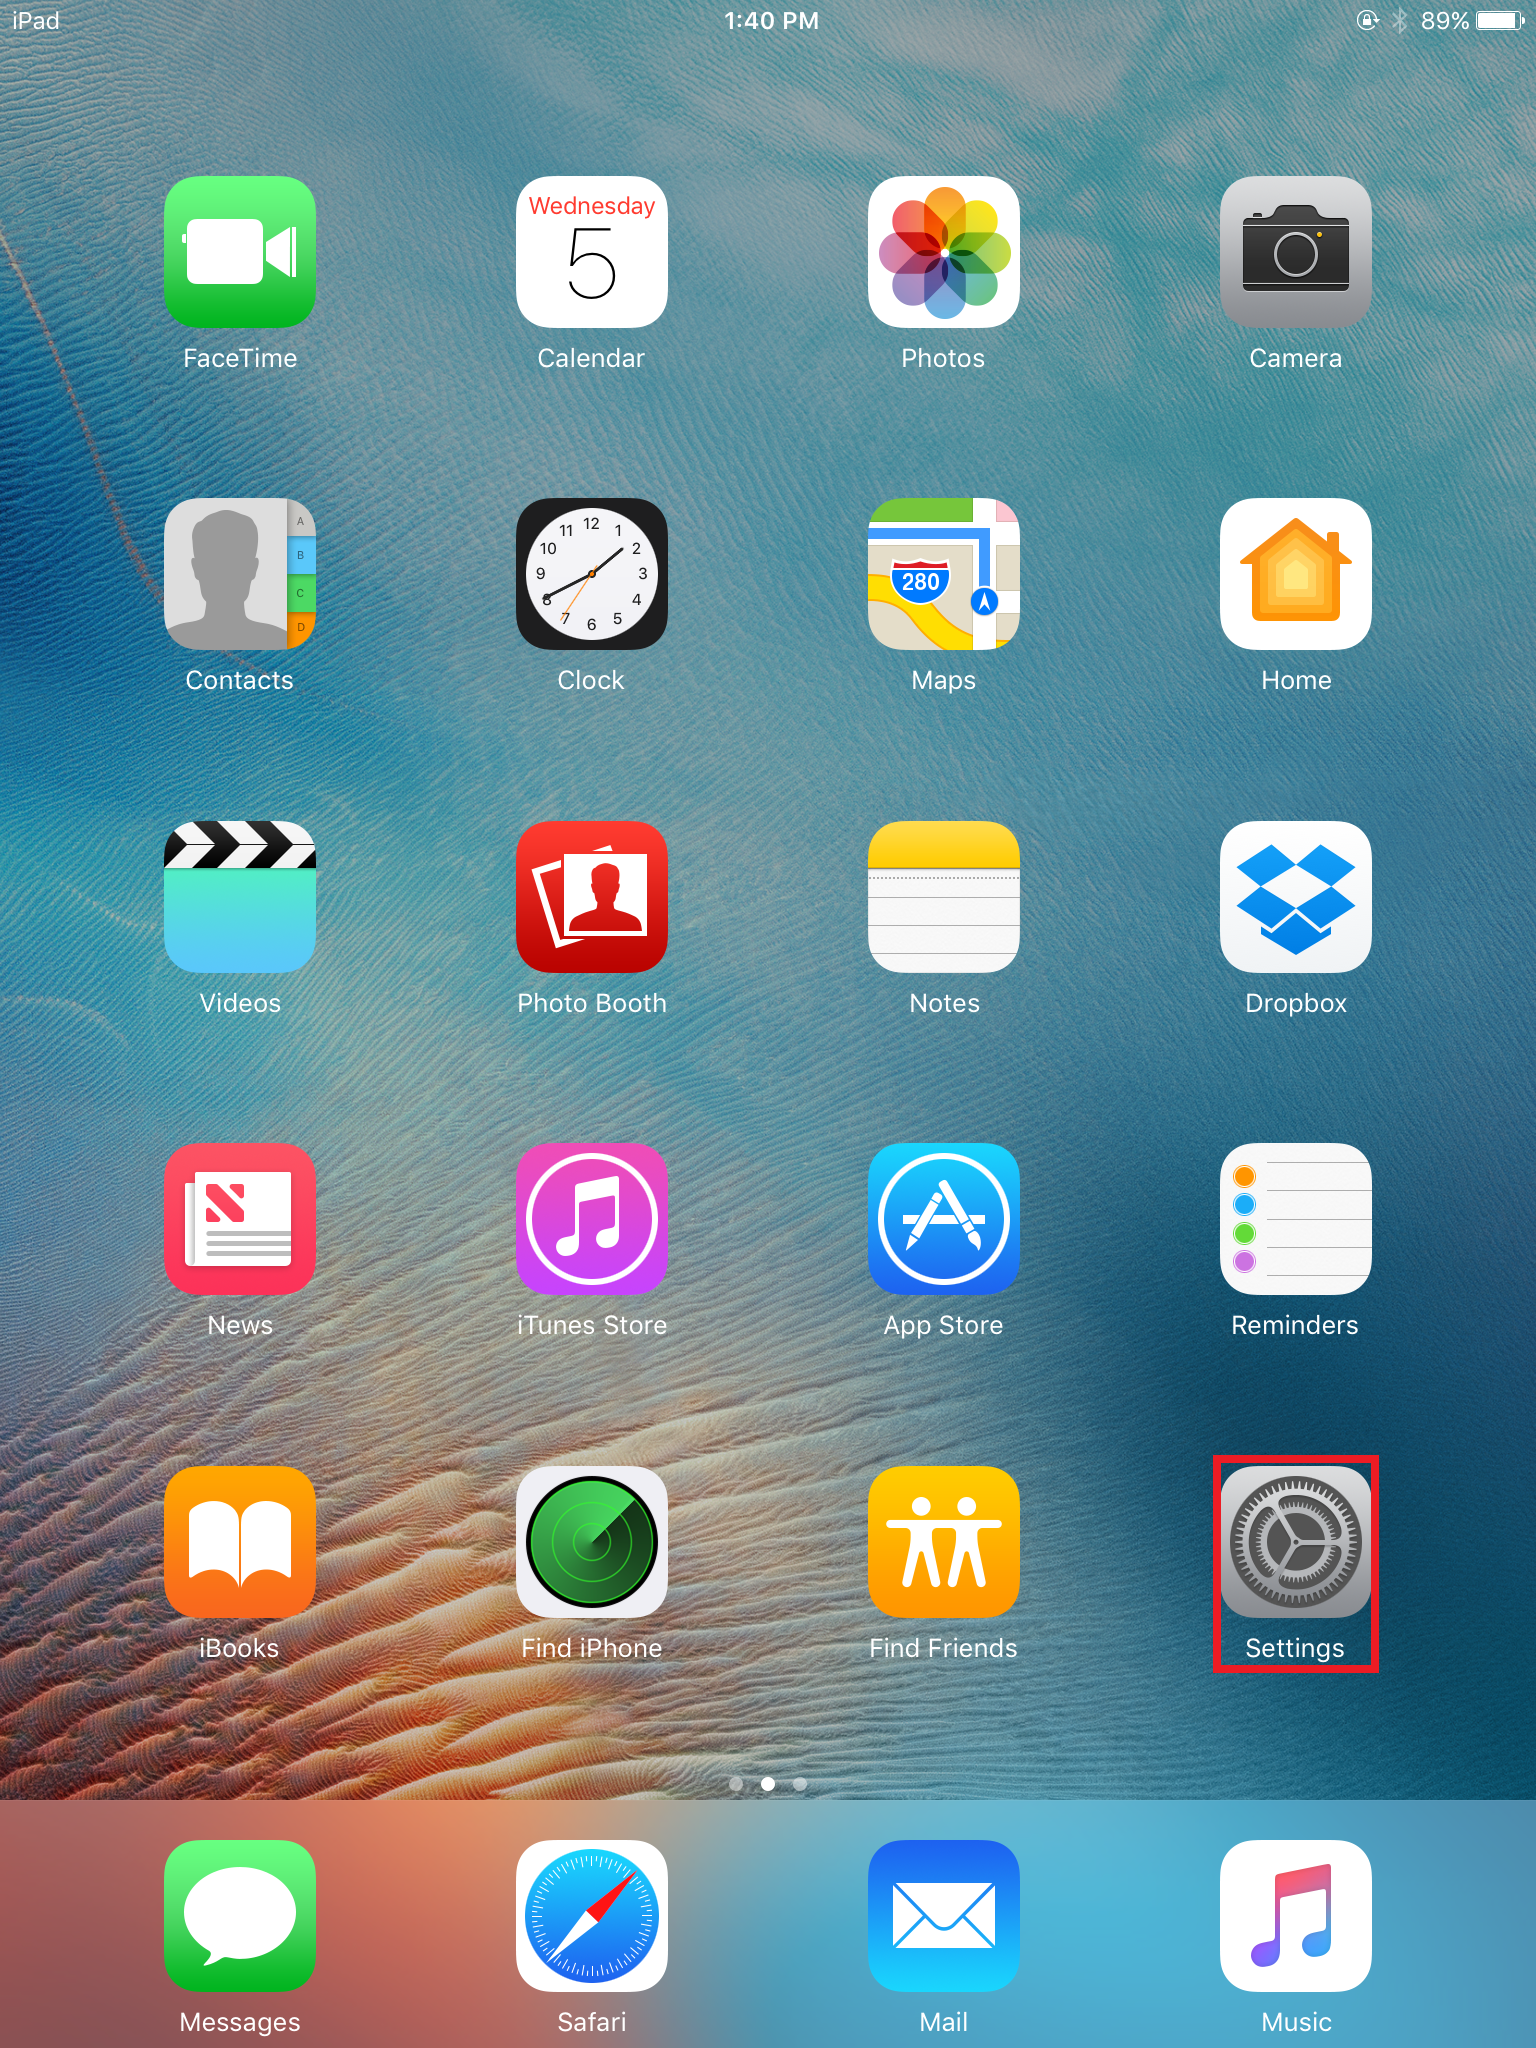 settings icon on the iPad 4 homescreen. 